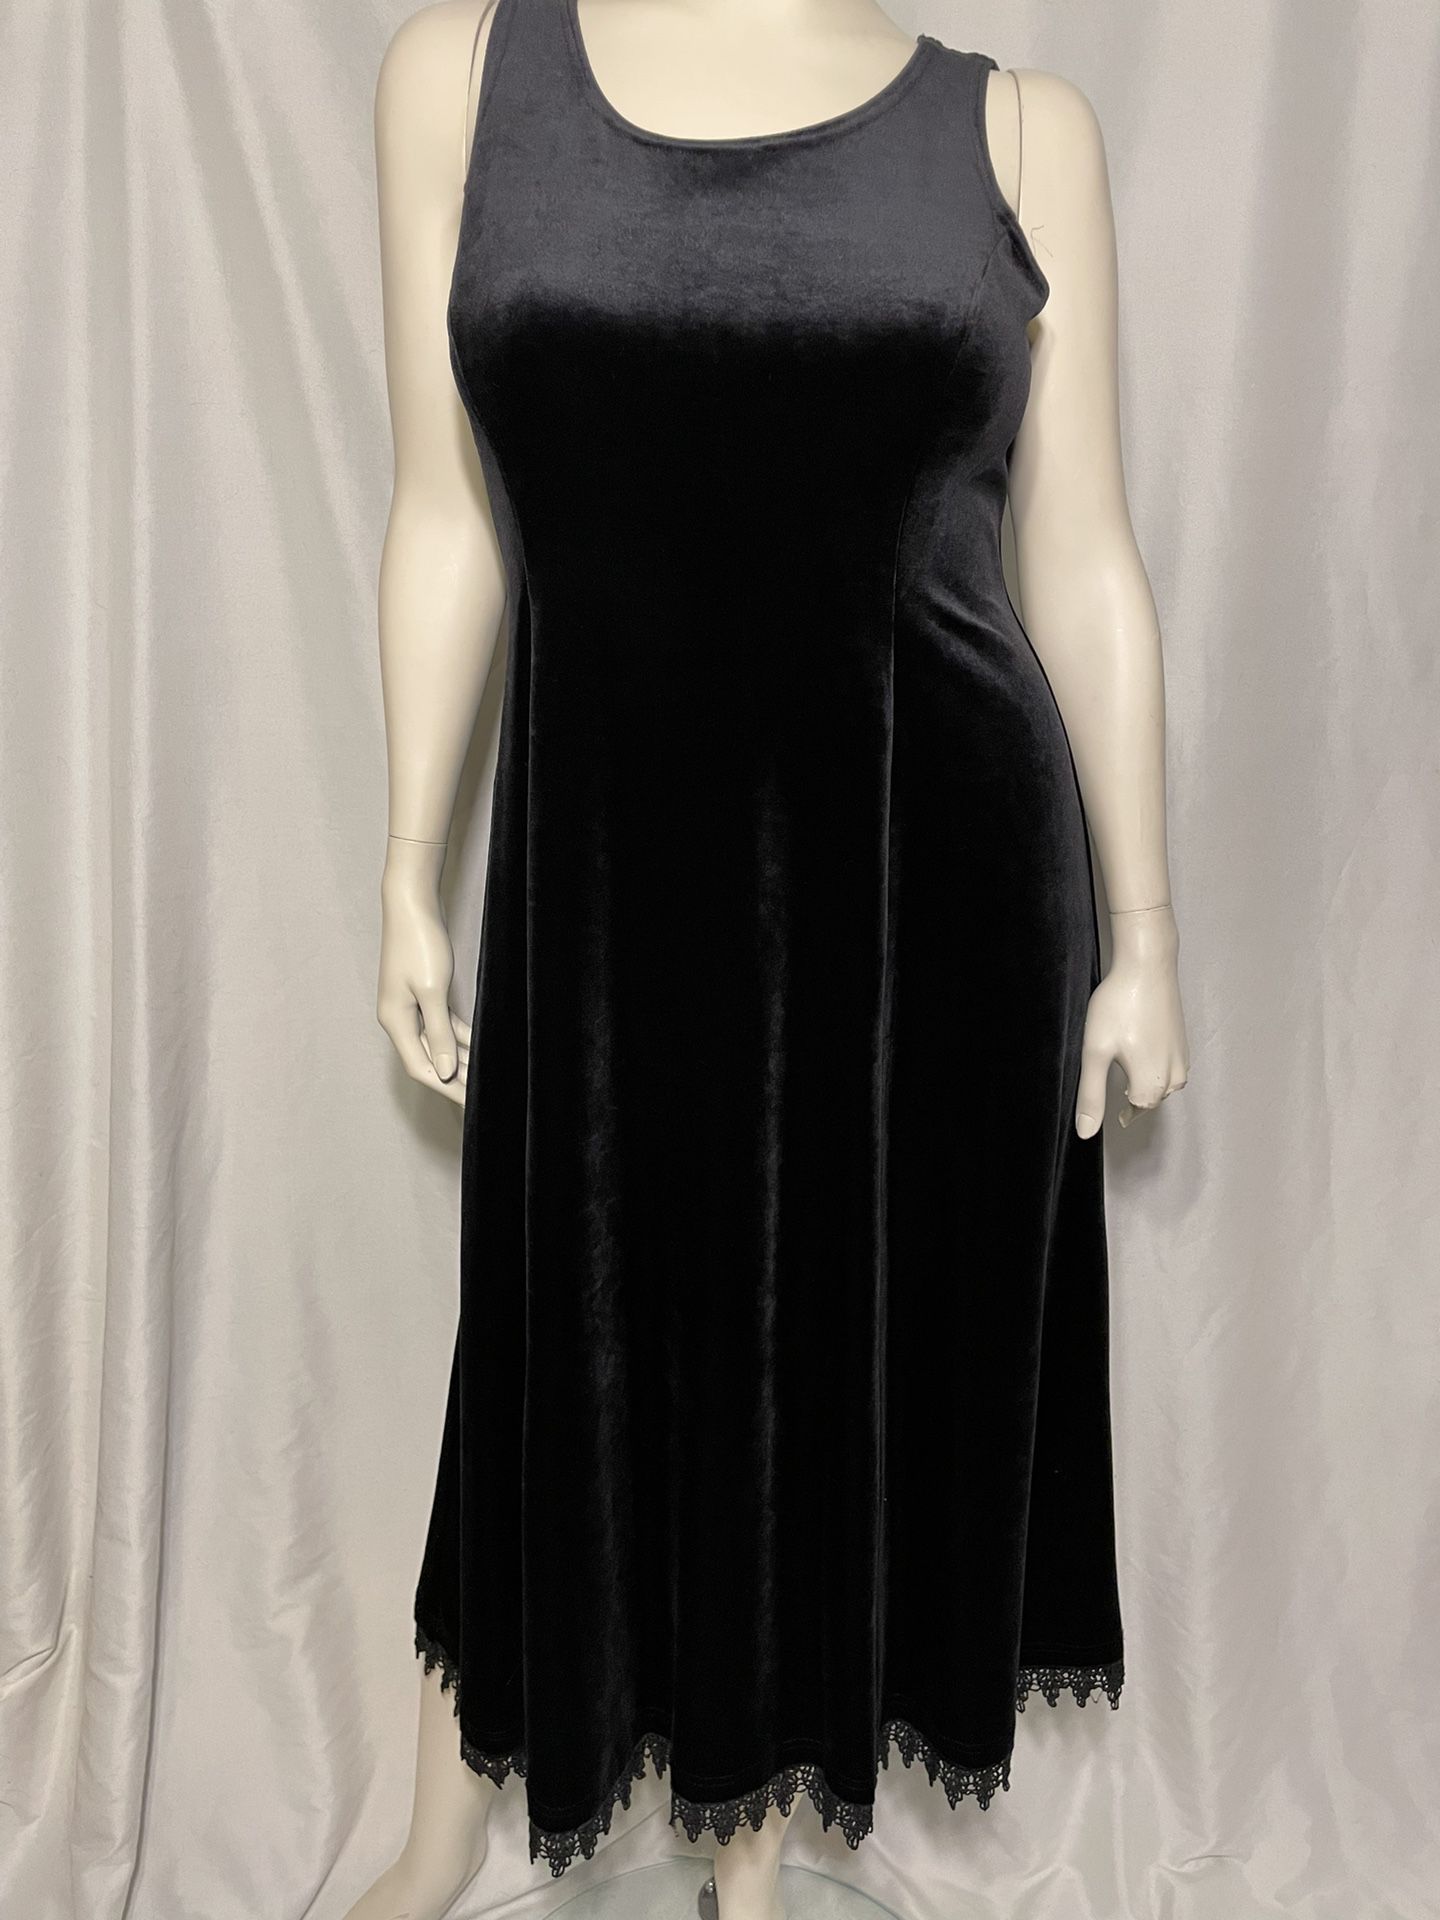 Coldwater Creek Dress Women’s Size 16